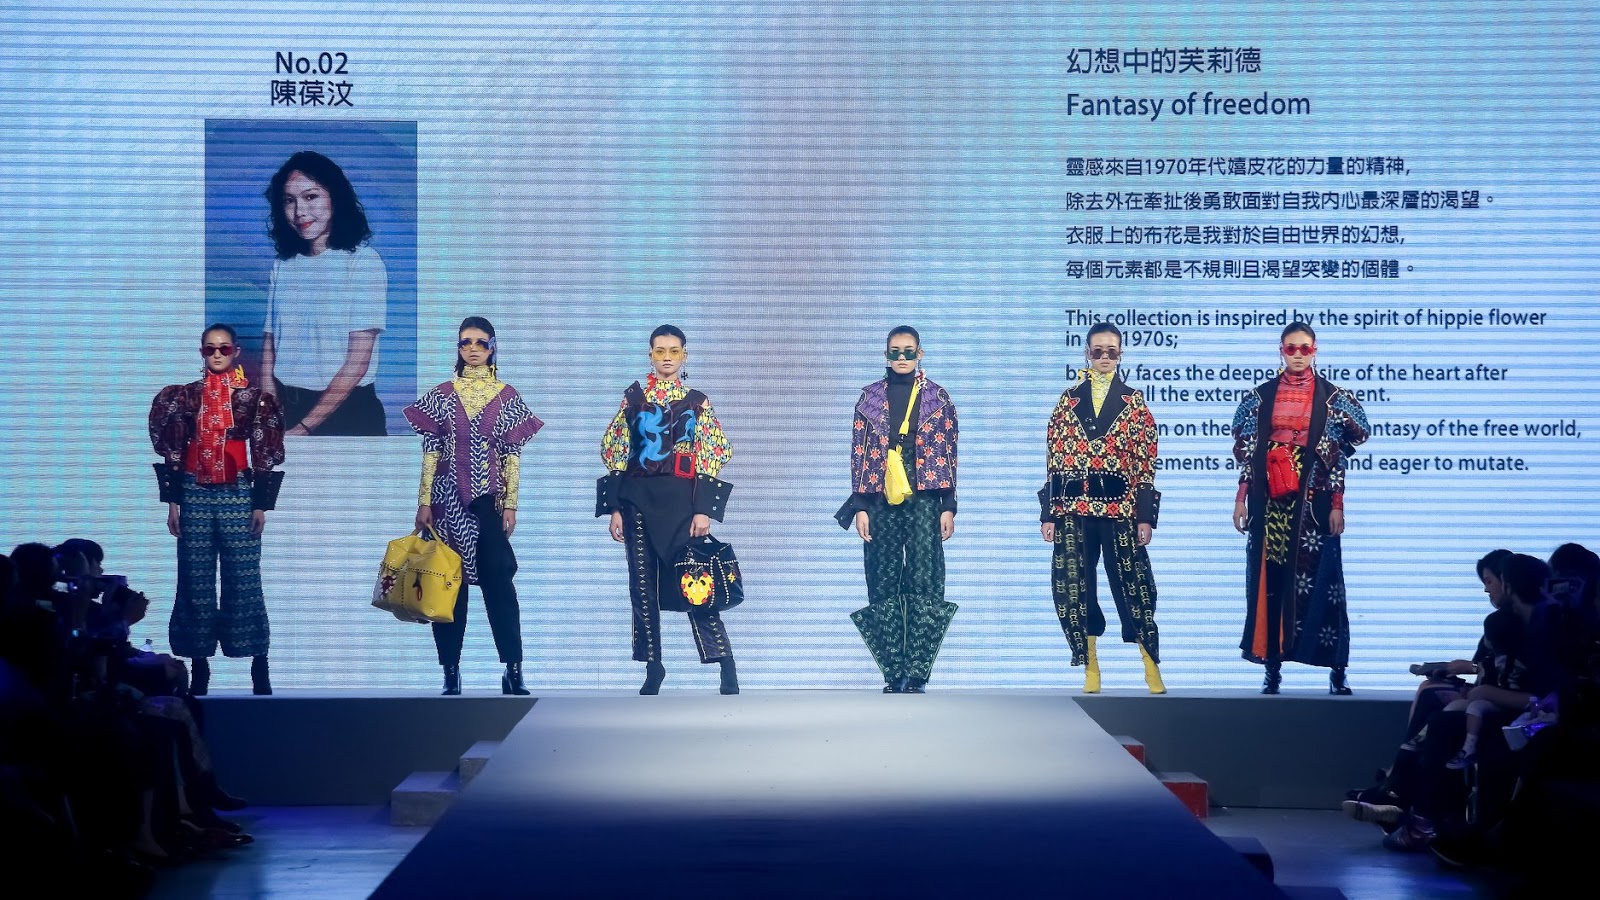 Fashion Studio Magazine: FASHION EVENTS - TAIWAN